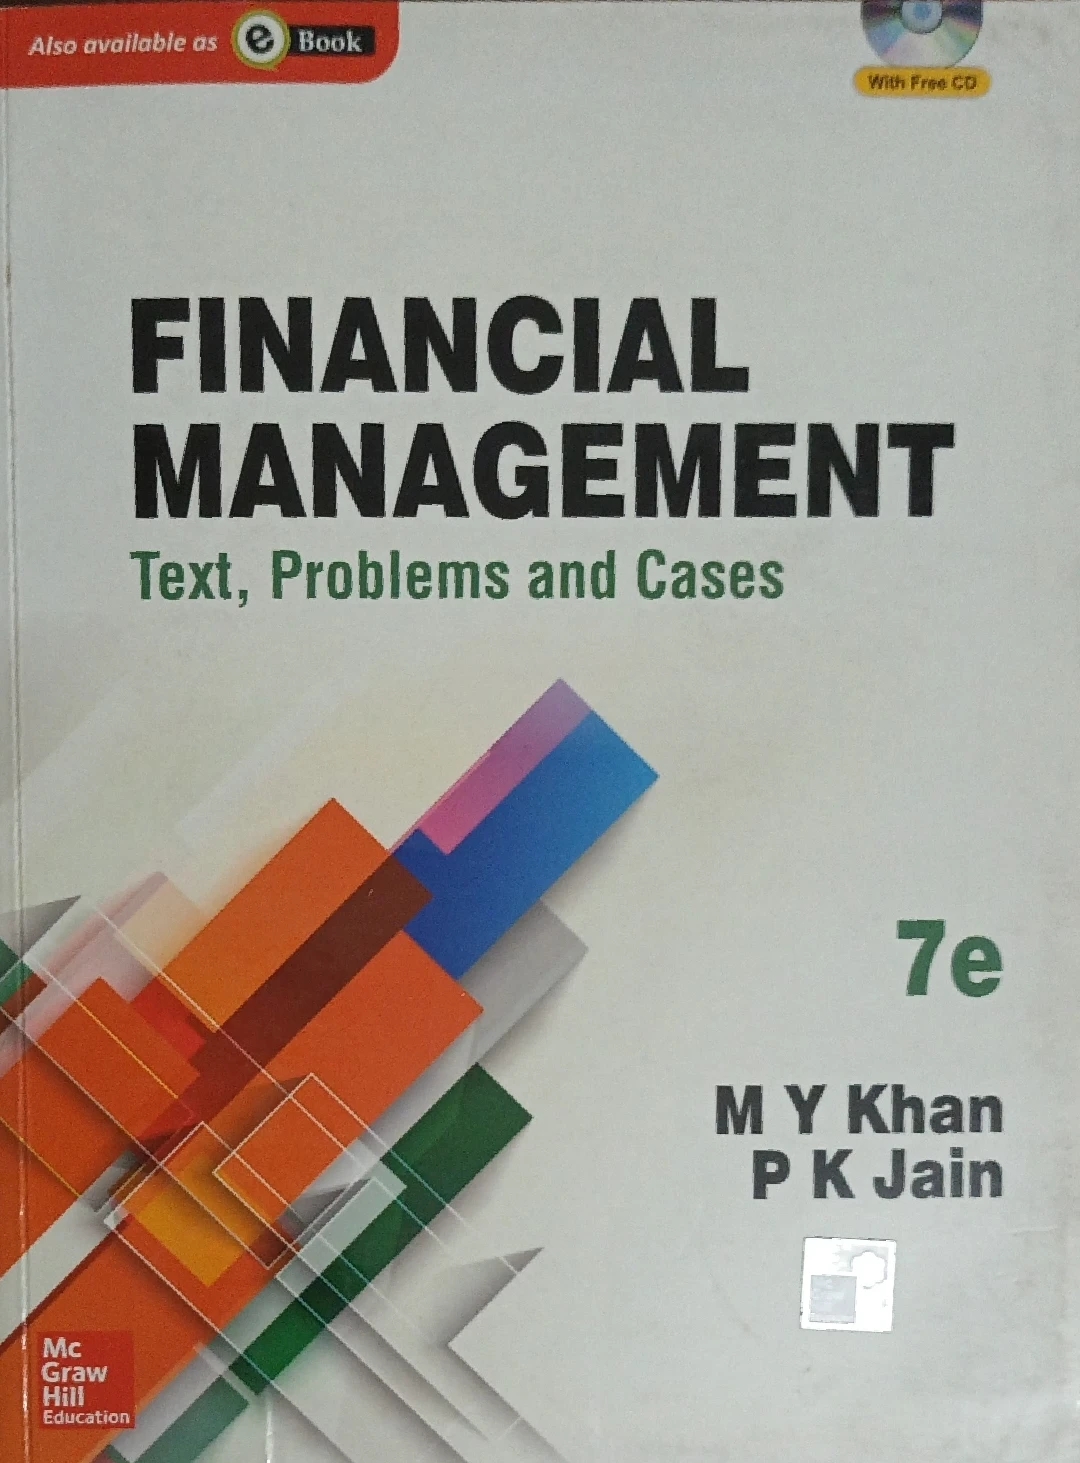 Financial Management 7e